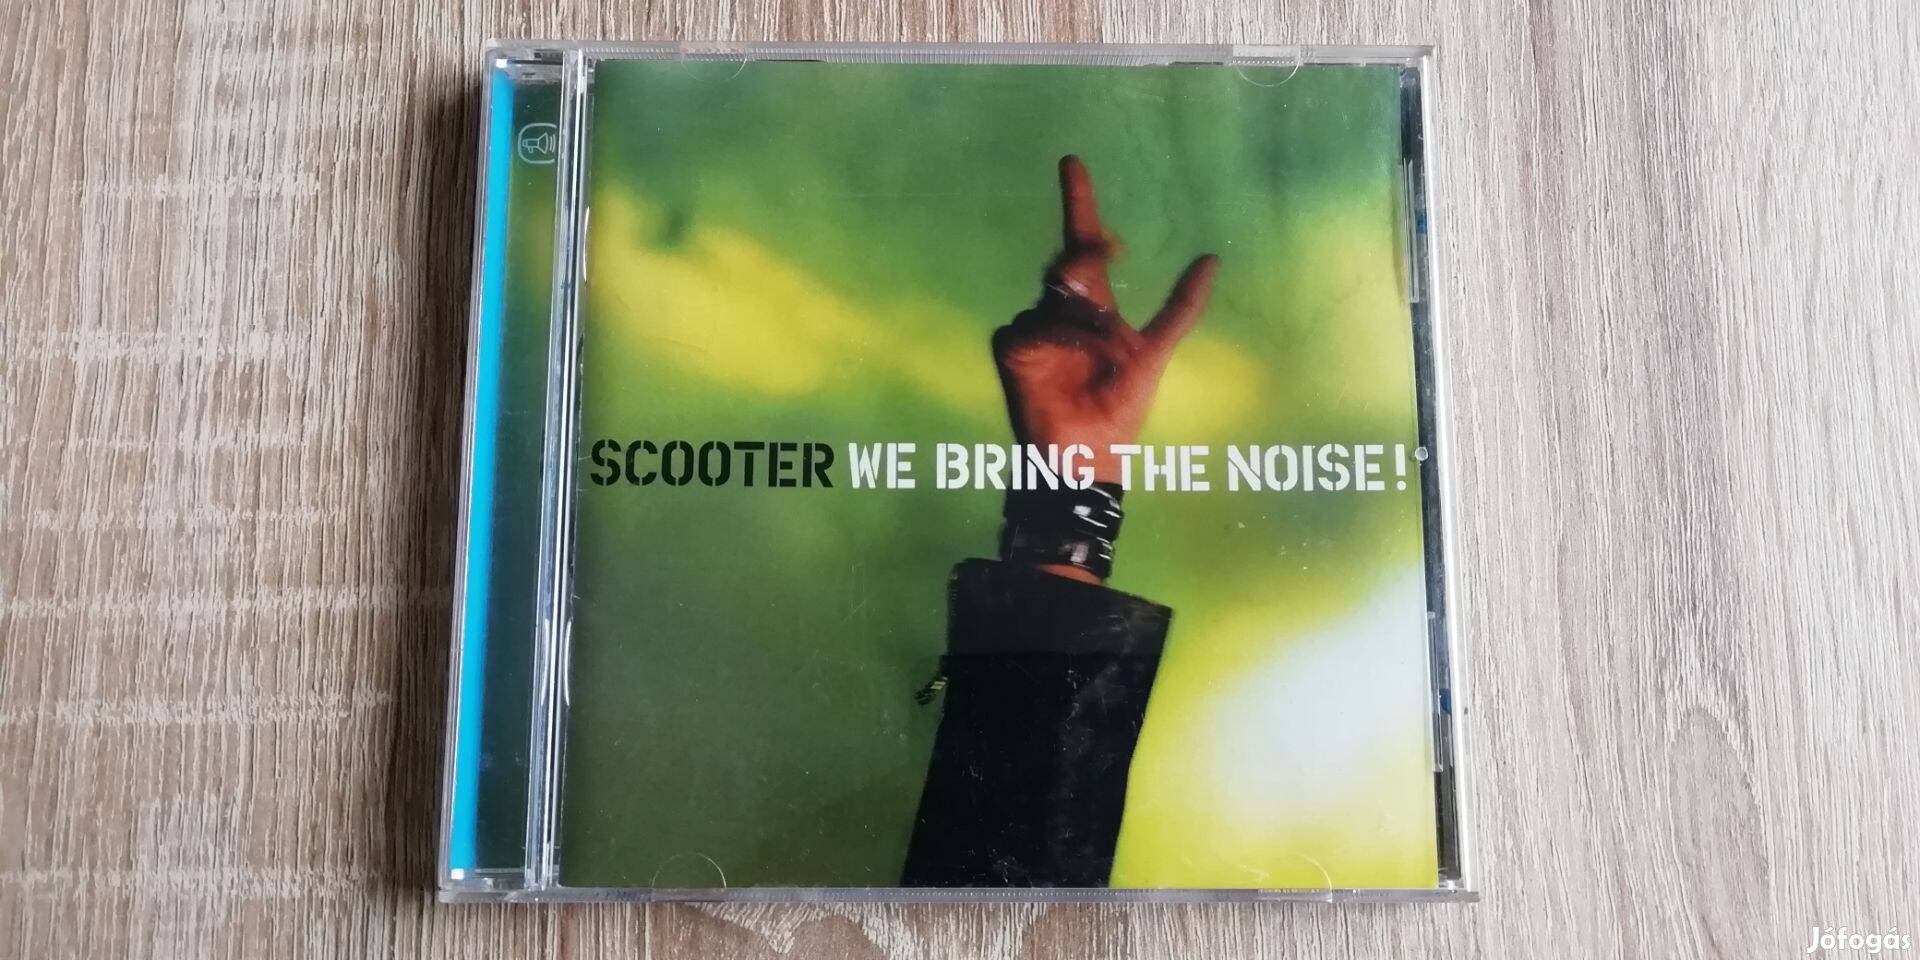 Scooter: We Bring the Noise! - eredeti CD, újszerű, karcmentes